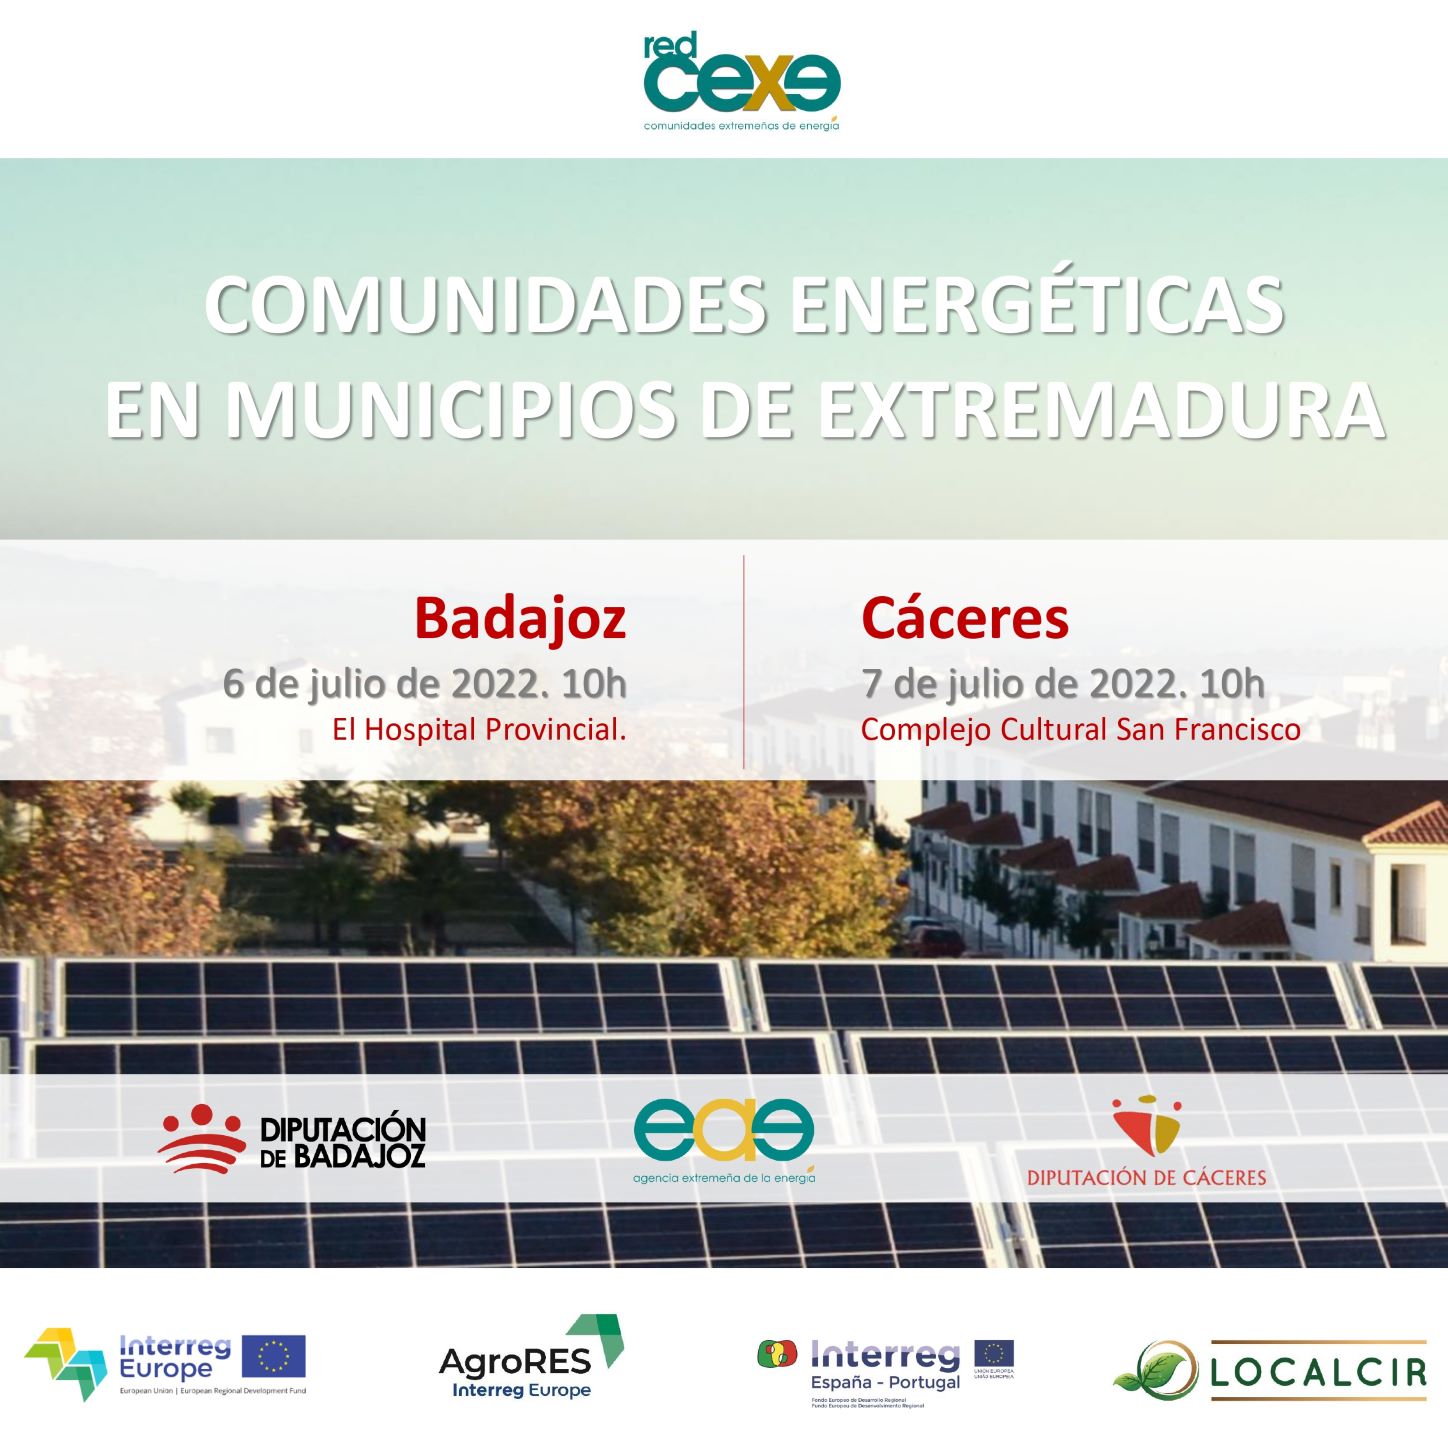 New model of local energy communities in Spain